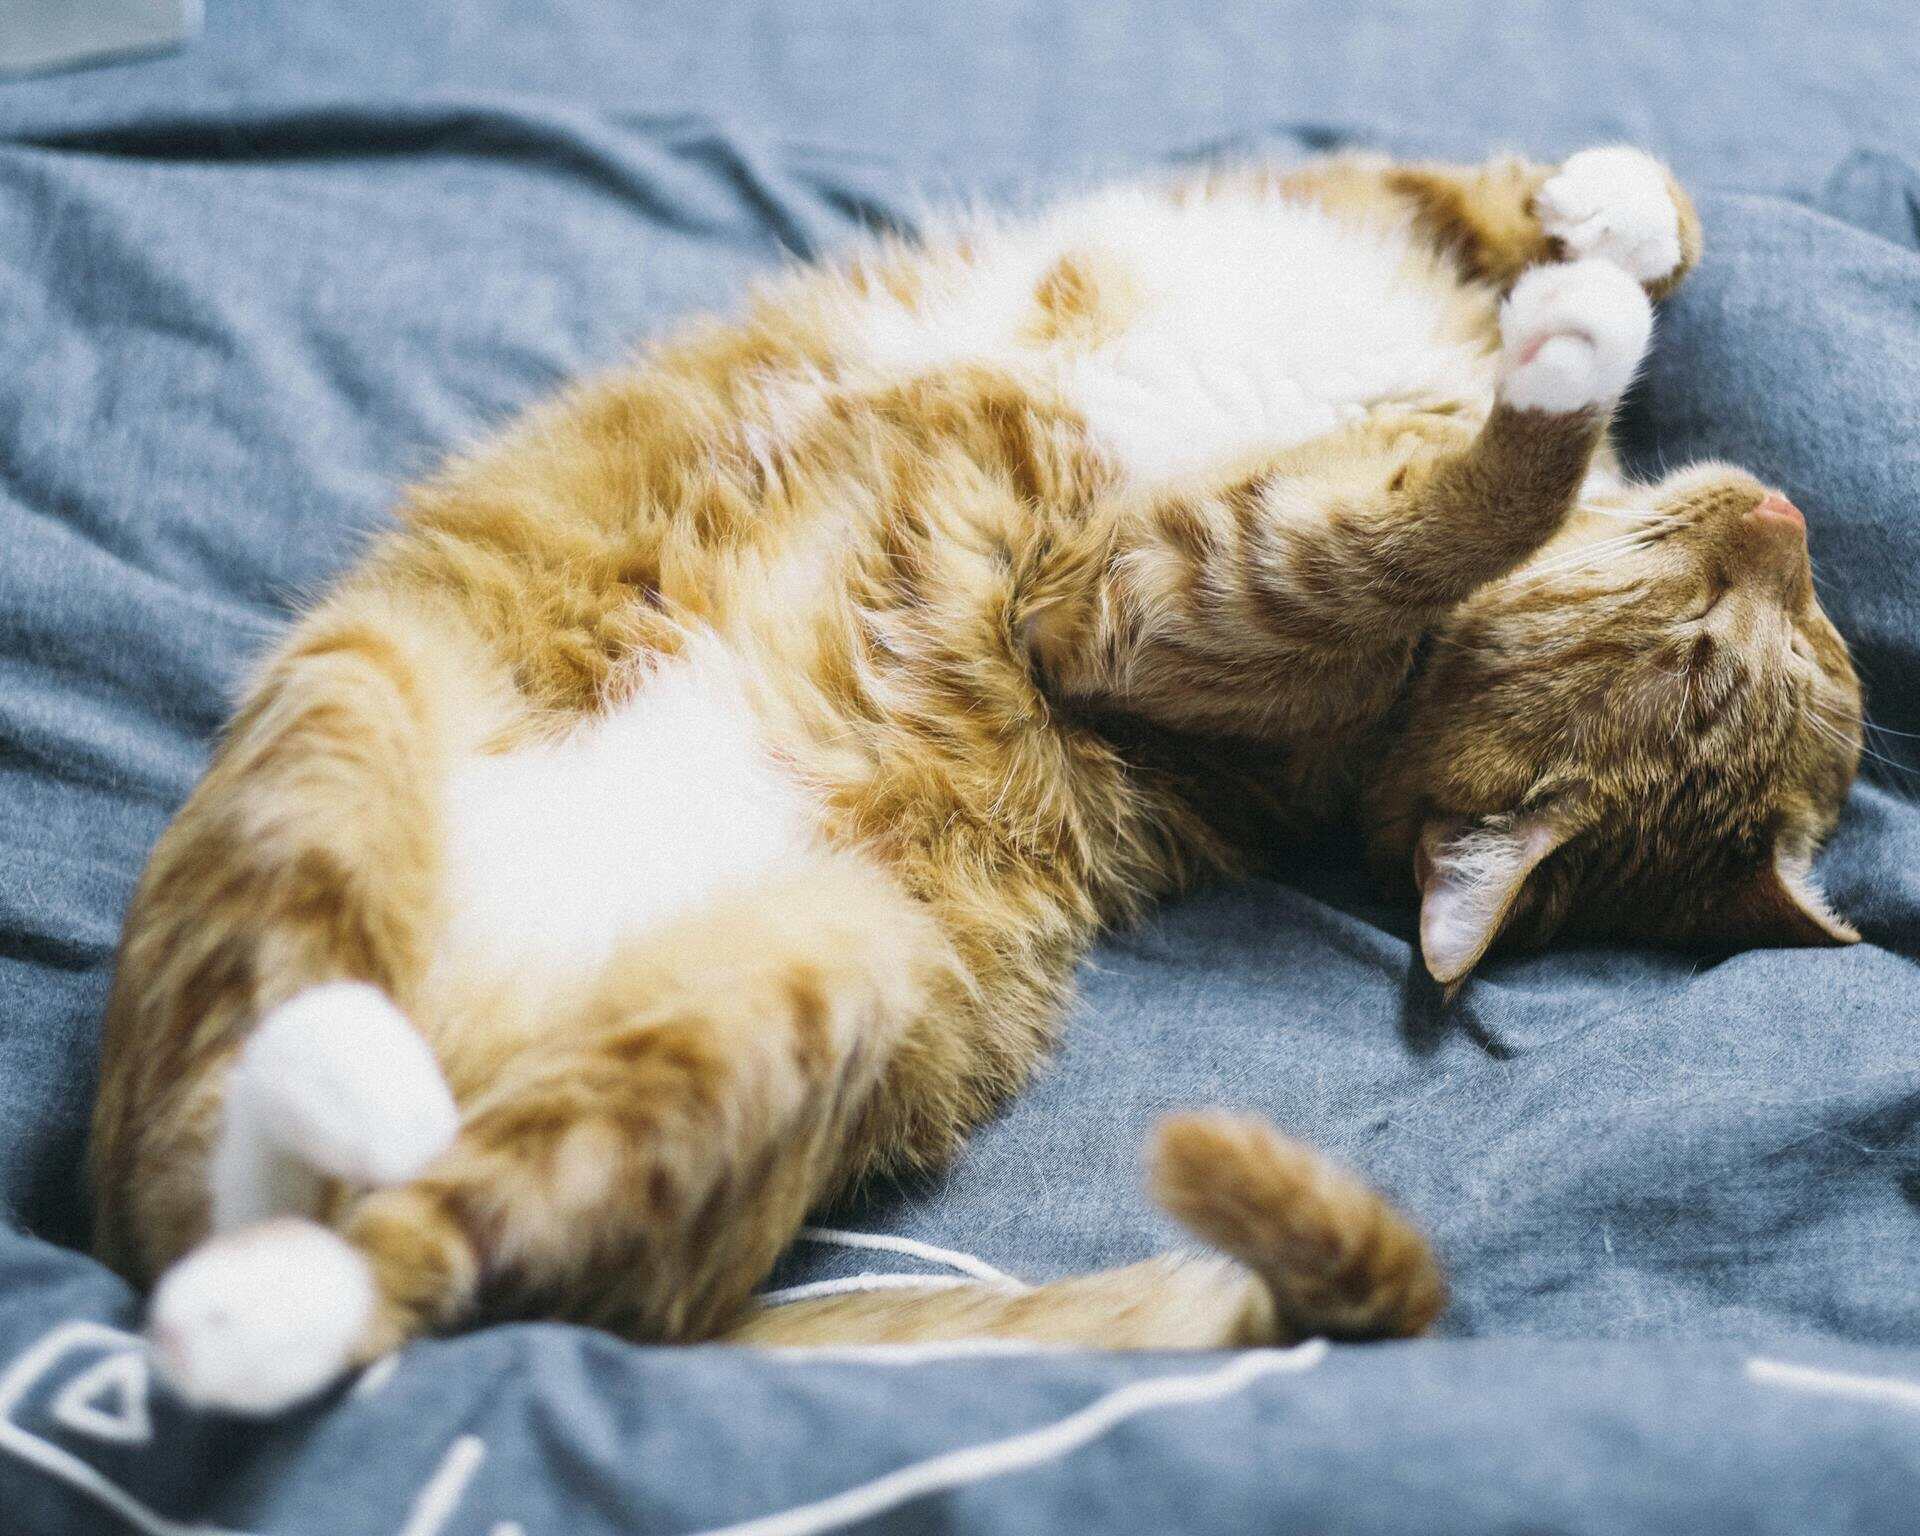 A cat sleeping in pretzel position in bed